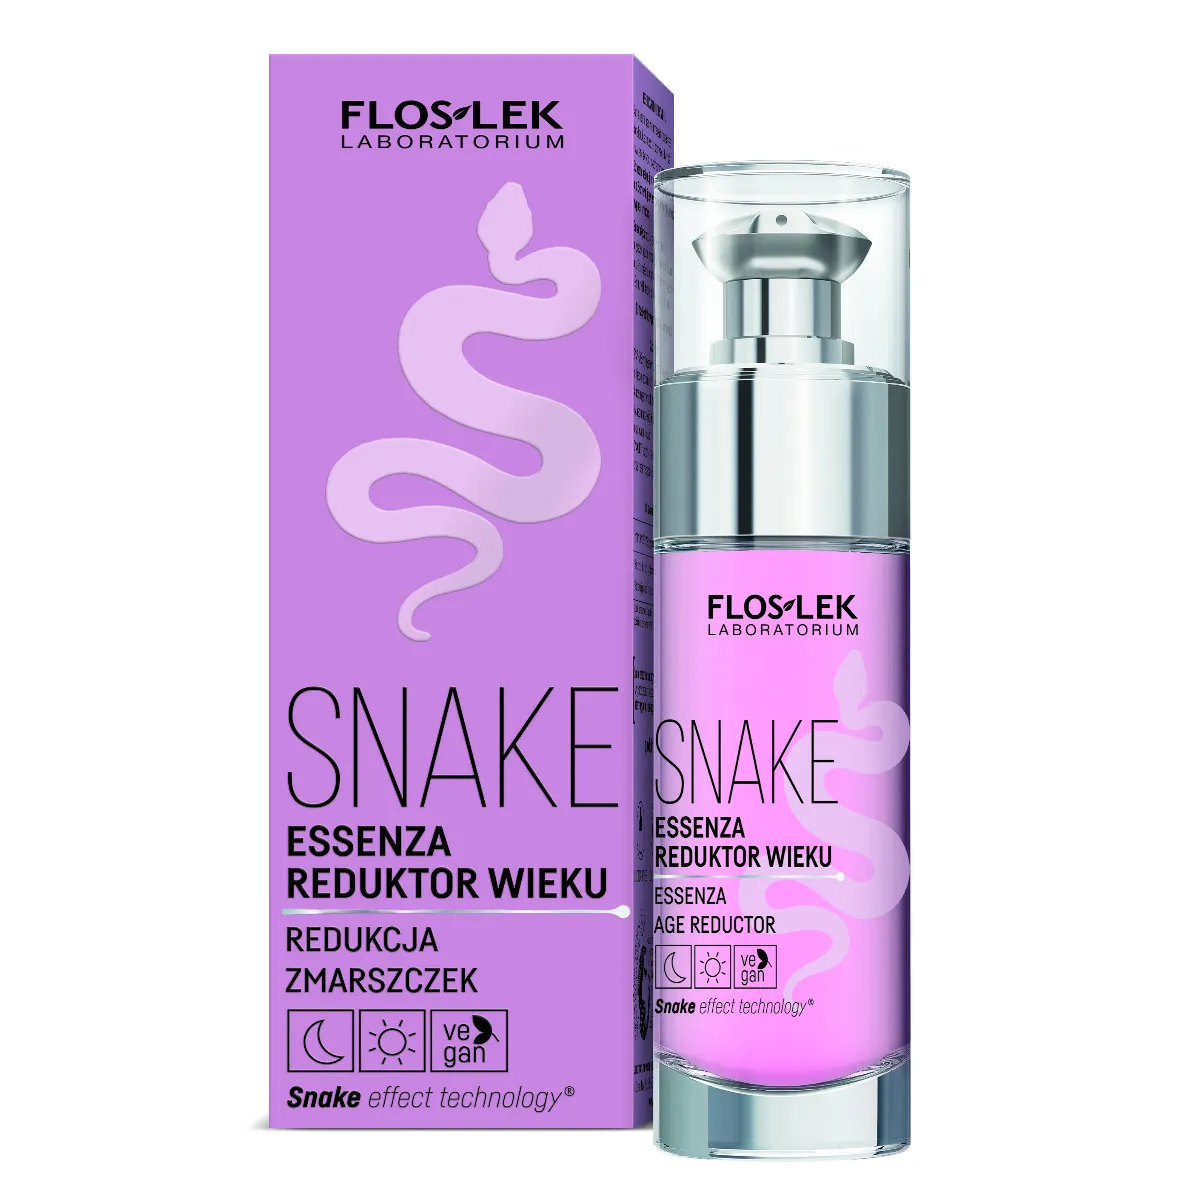 FlosLek Laboratorium Skin Care Expert Snake Essenza, reduktor wieku, 30 ml